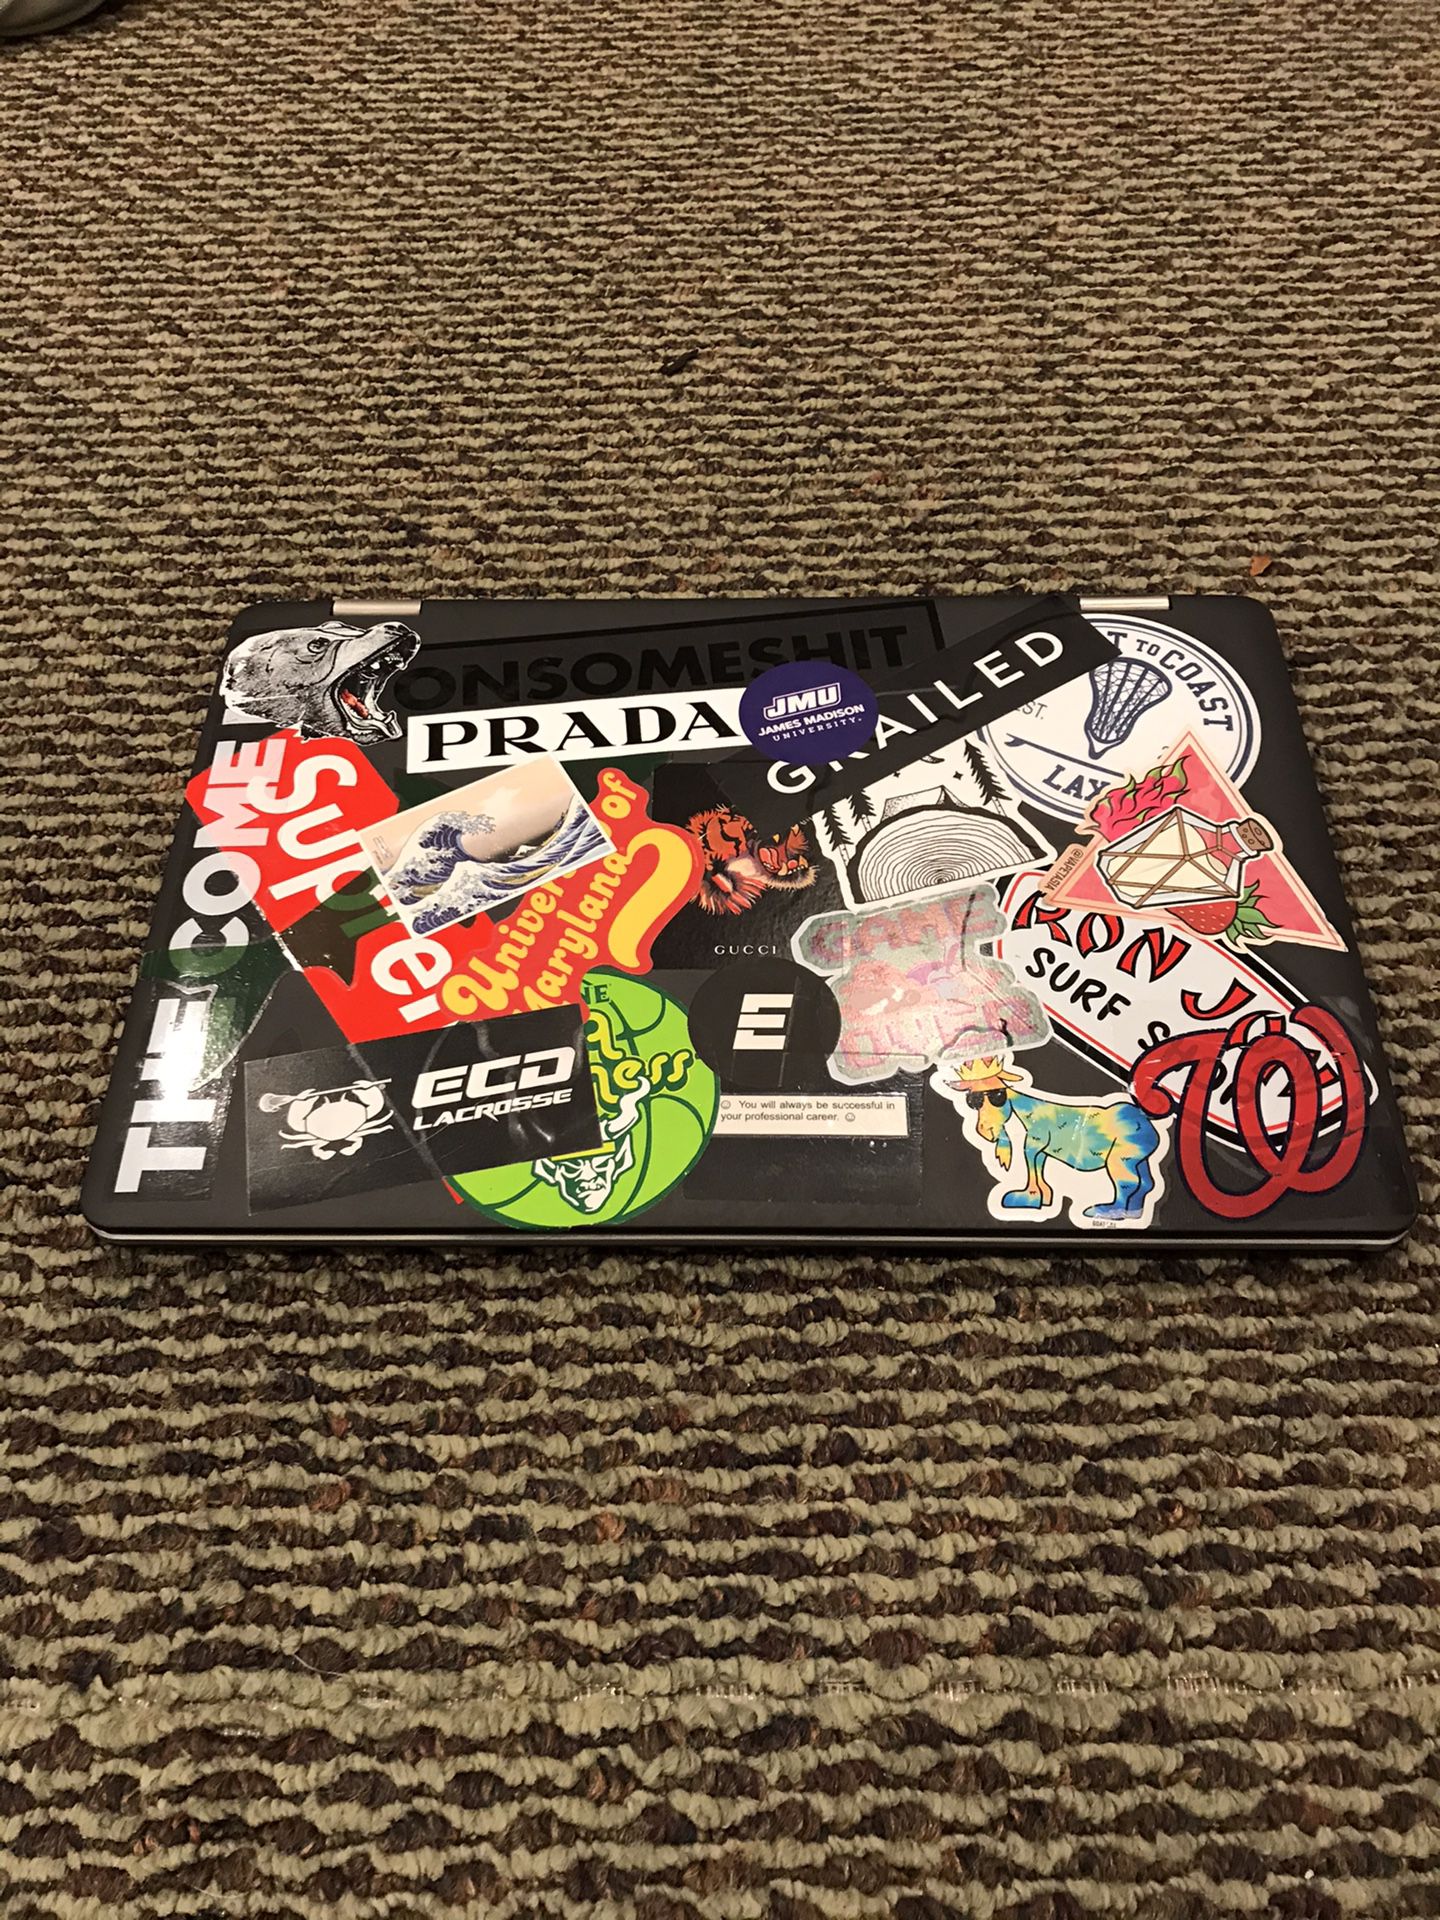 Sticker bombed Dell laptop